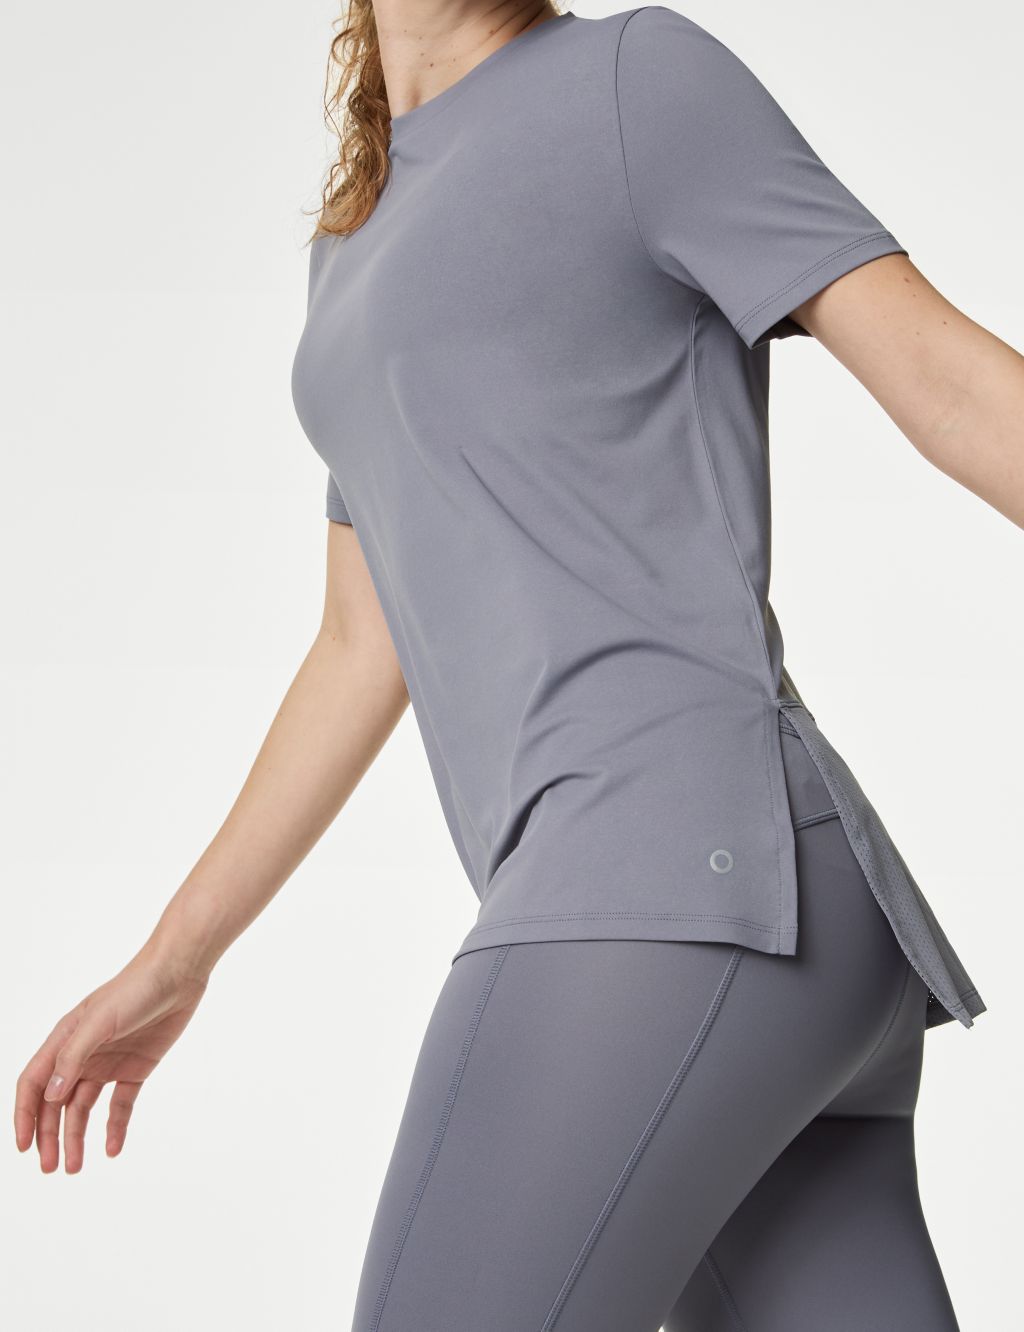 Women's Mesh Yoga Shirt Sexy Sport Vest Top Blouse Cover Up